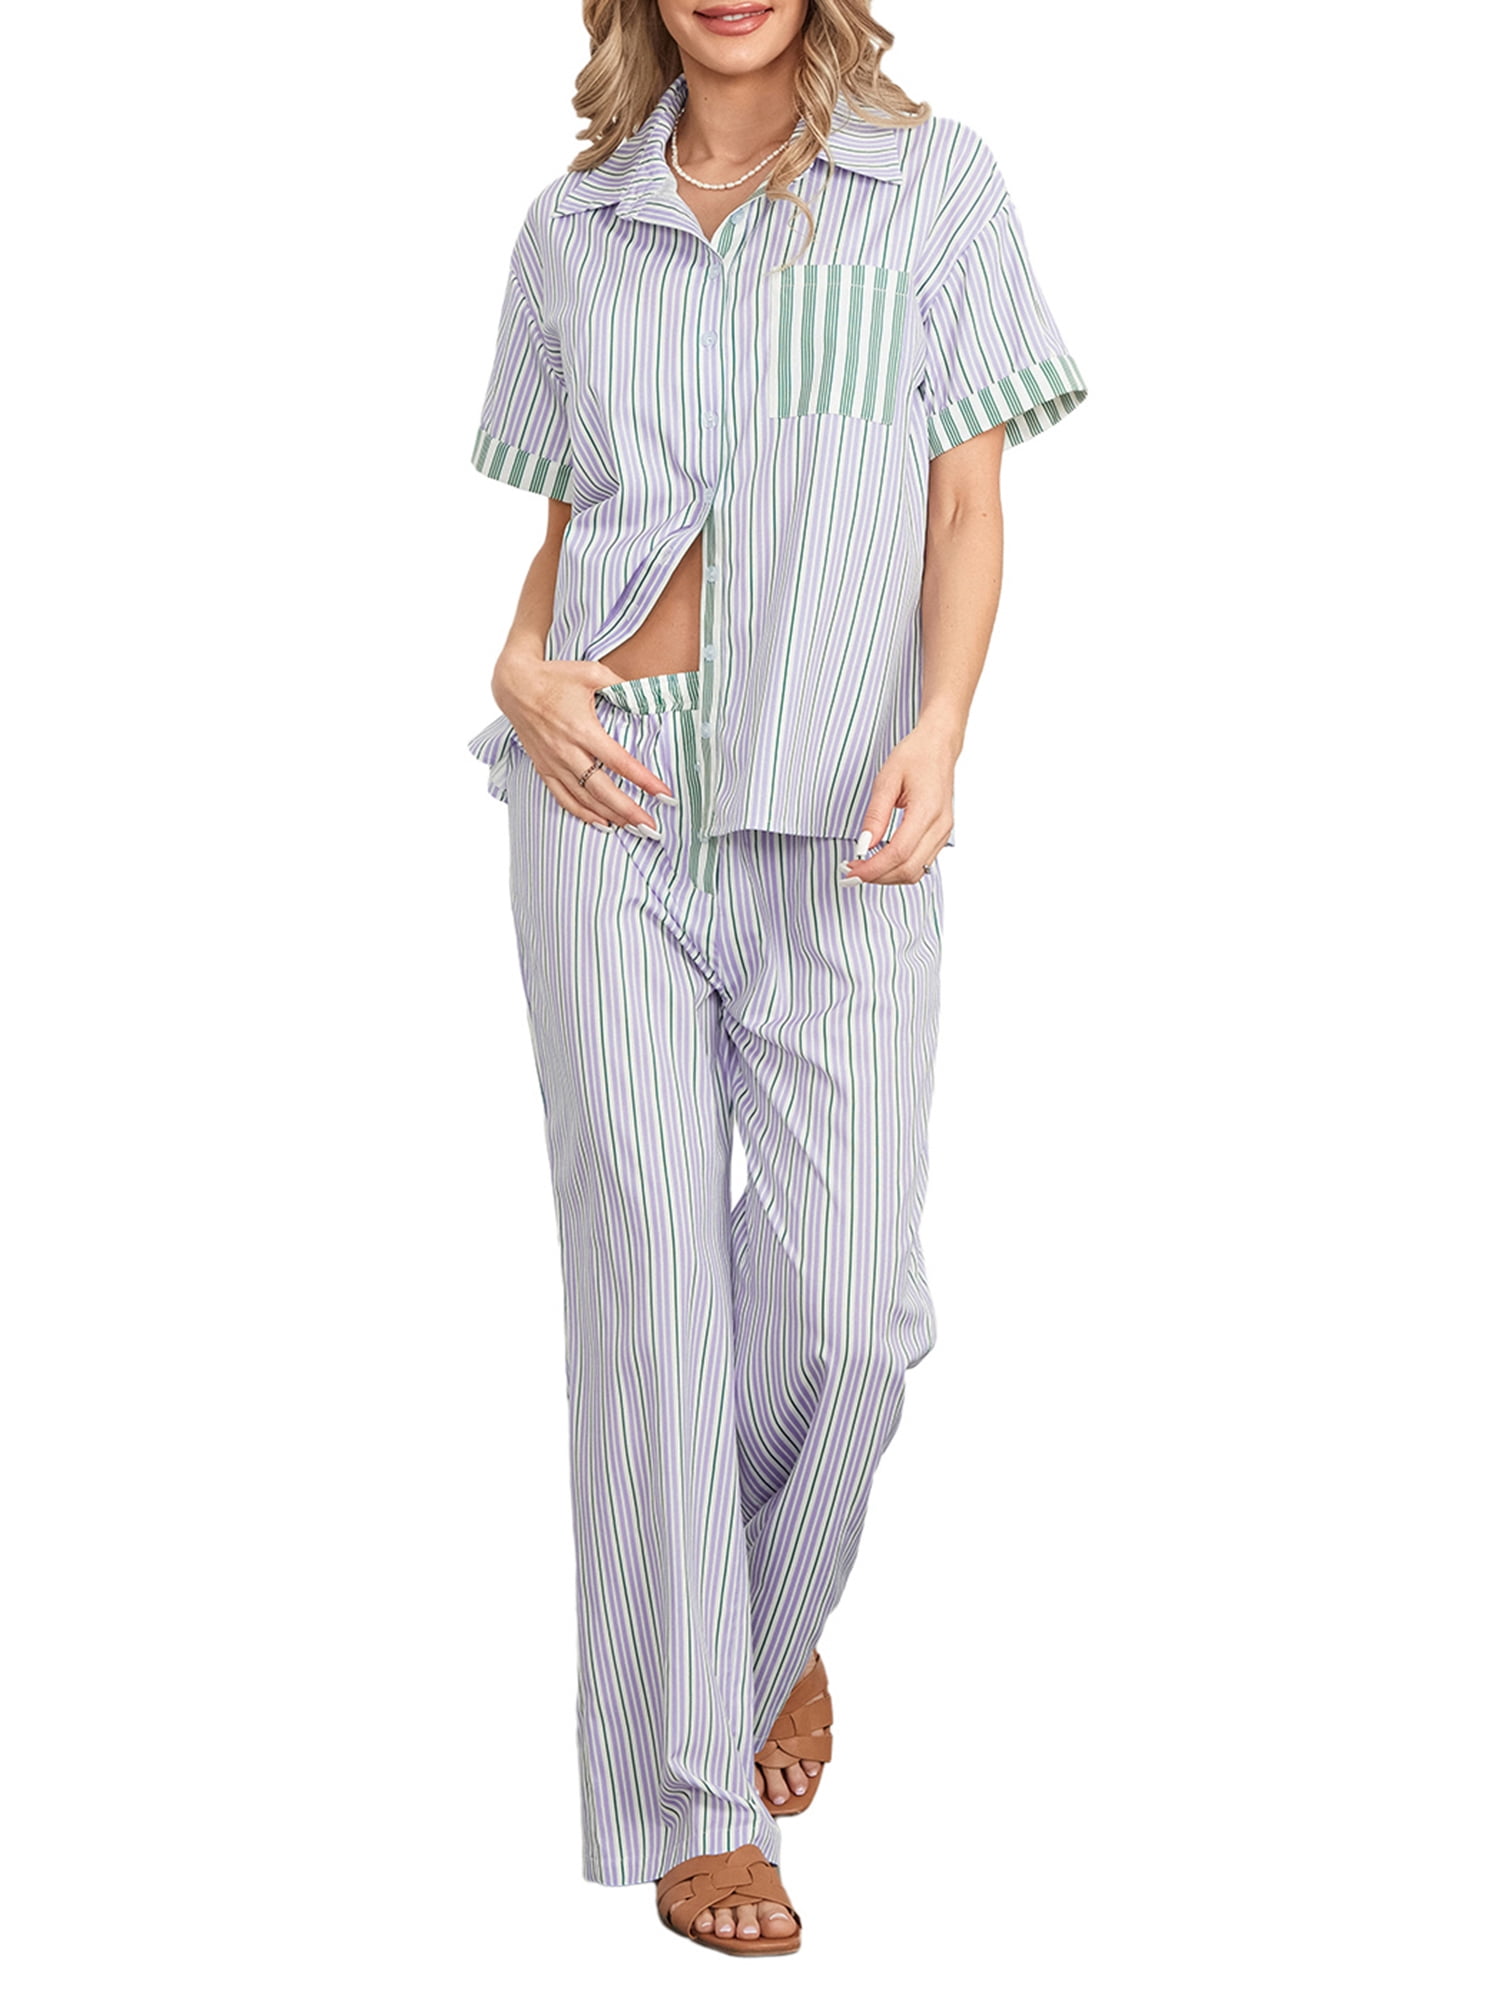 JYYYBF Women Striped Pajama Set, Short Sleeve Button Closure Shirt with ...